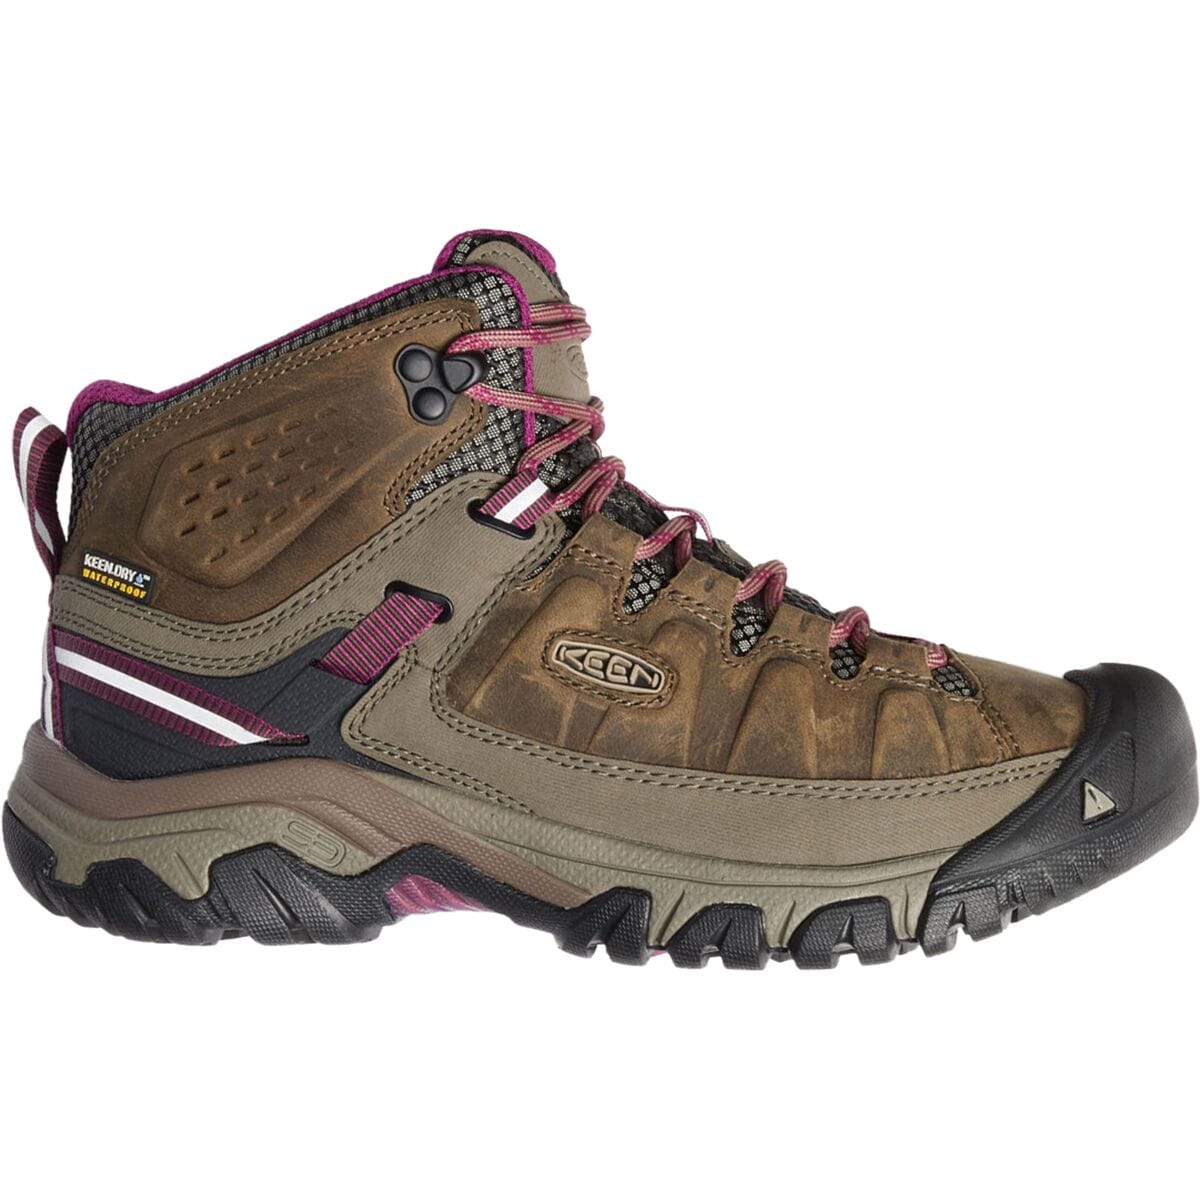 KEEN Targhee III Mid Waterproof Hiking Boot - Women's | Backcountry.com